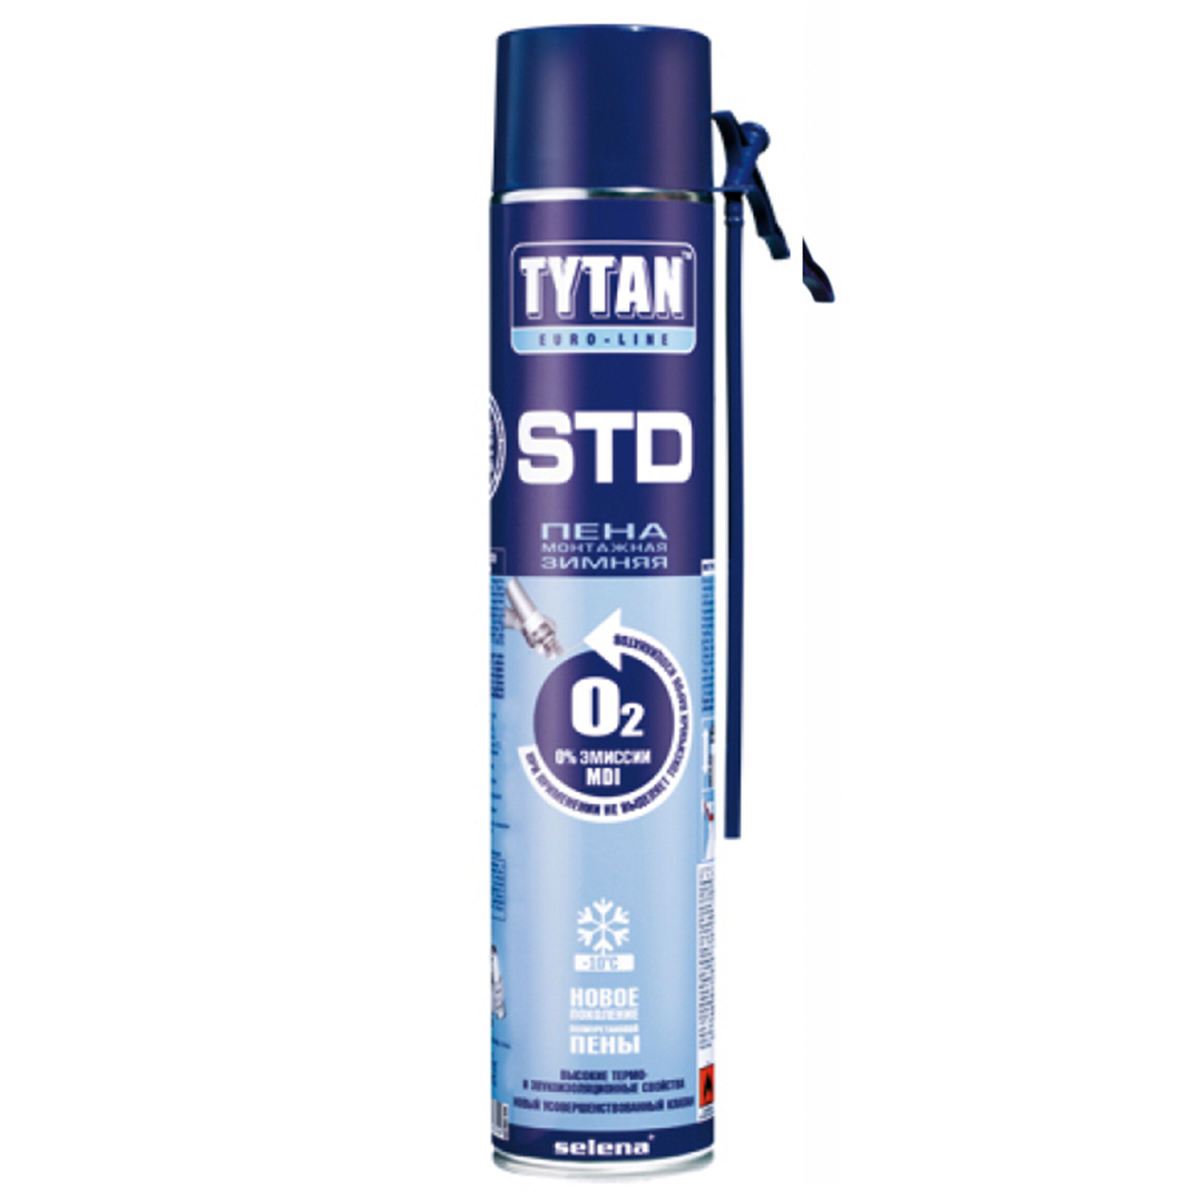 TYTAN Euro-line STD   